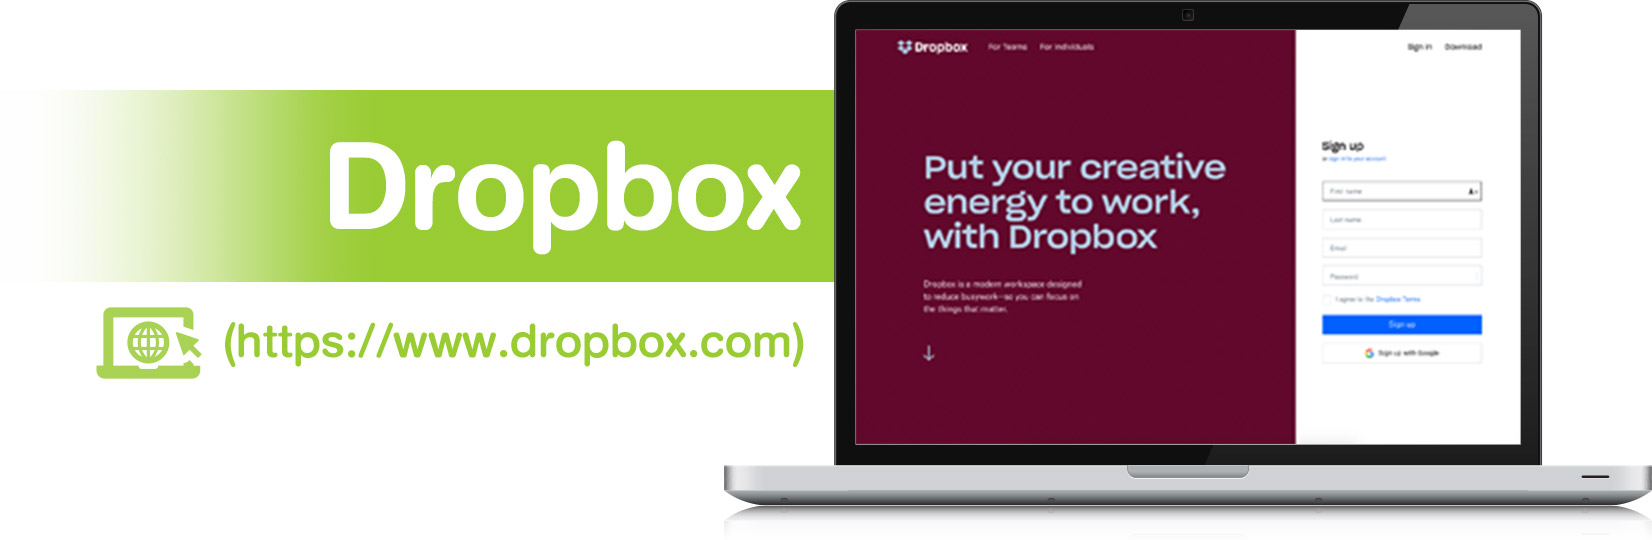 Dropbox โปรแกรมเก็บไฟล์ขั้นเทพของเหล่า Startup Thailand